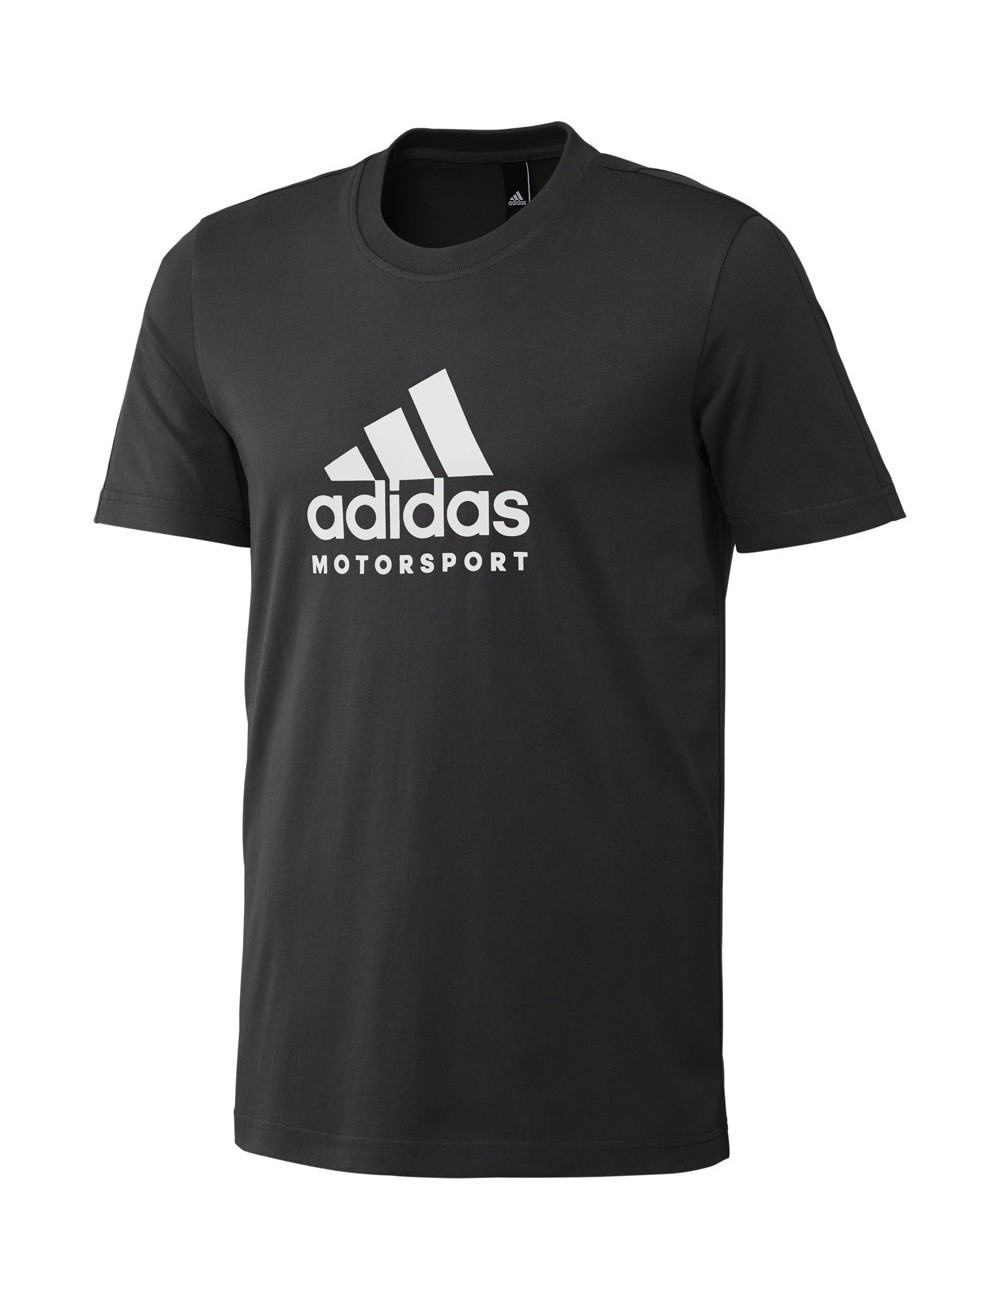 Camiseta Adidas Motorsport blanco / negro